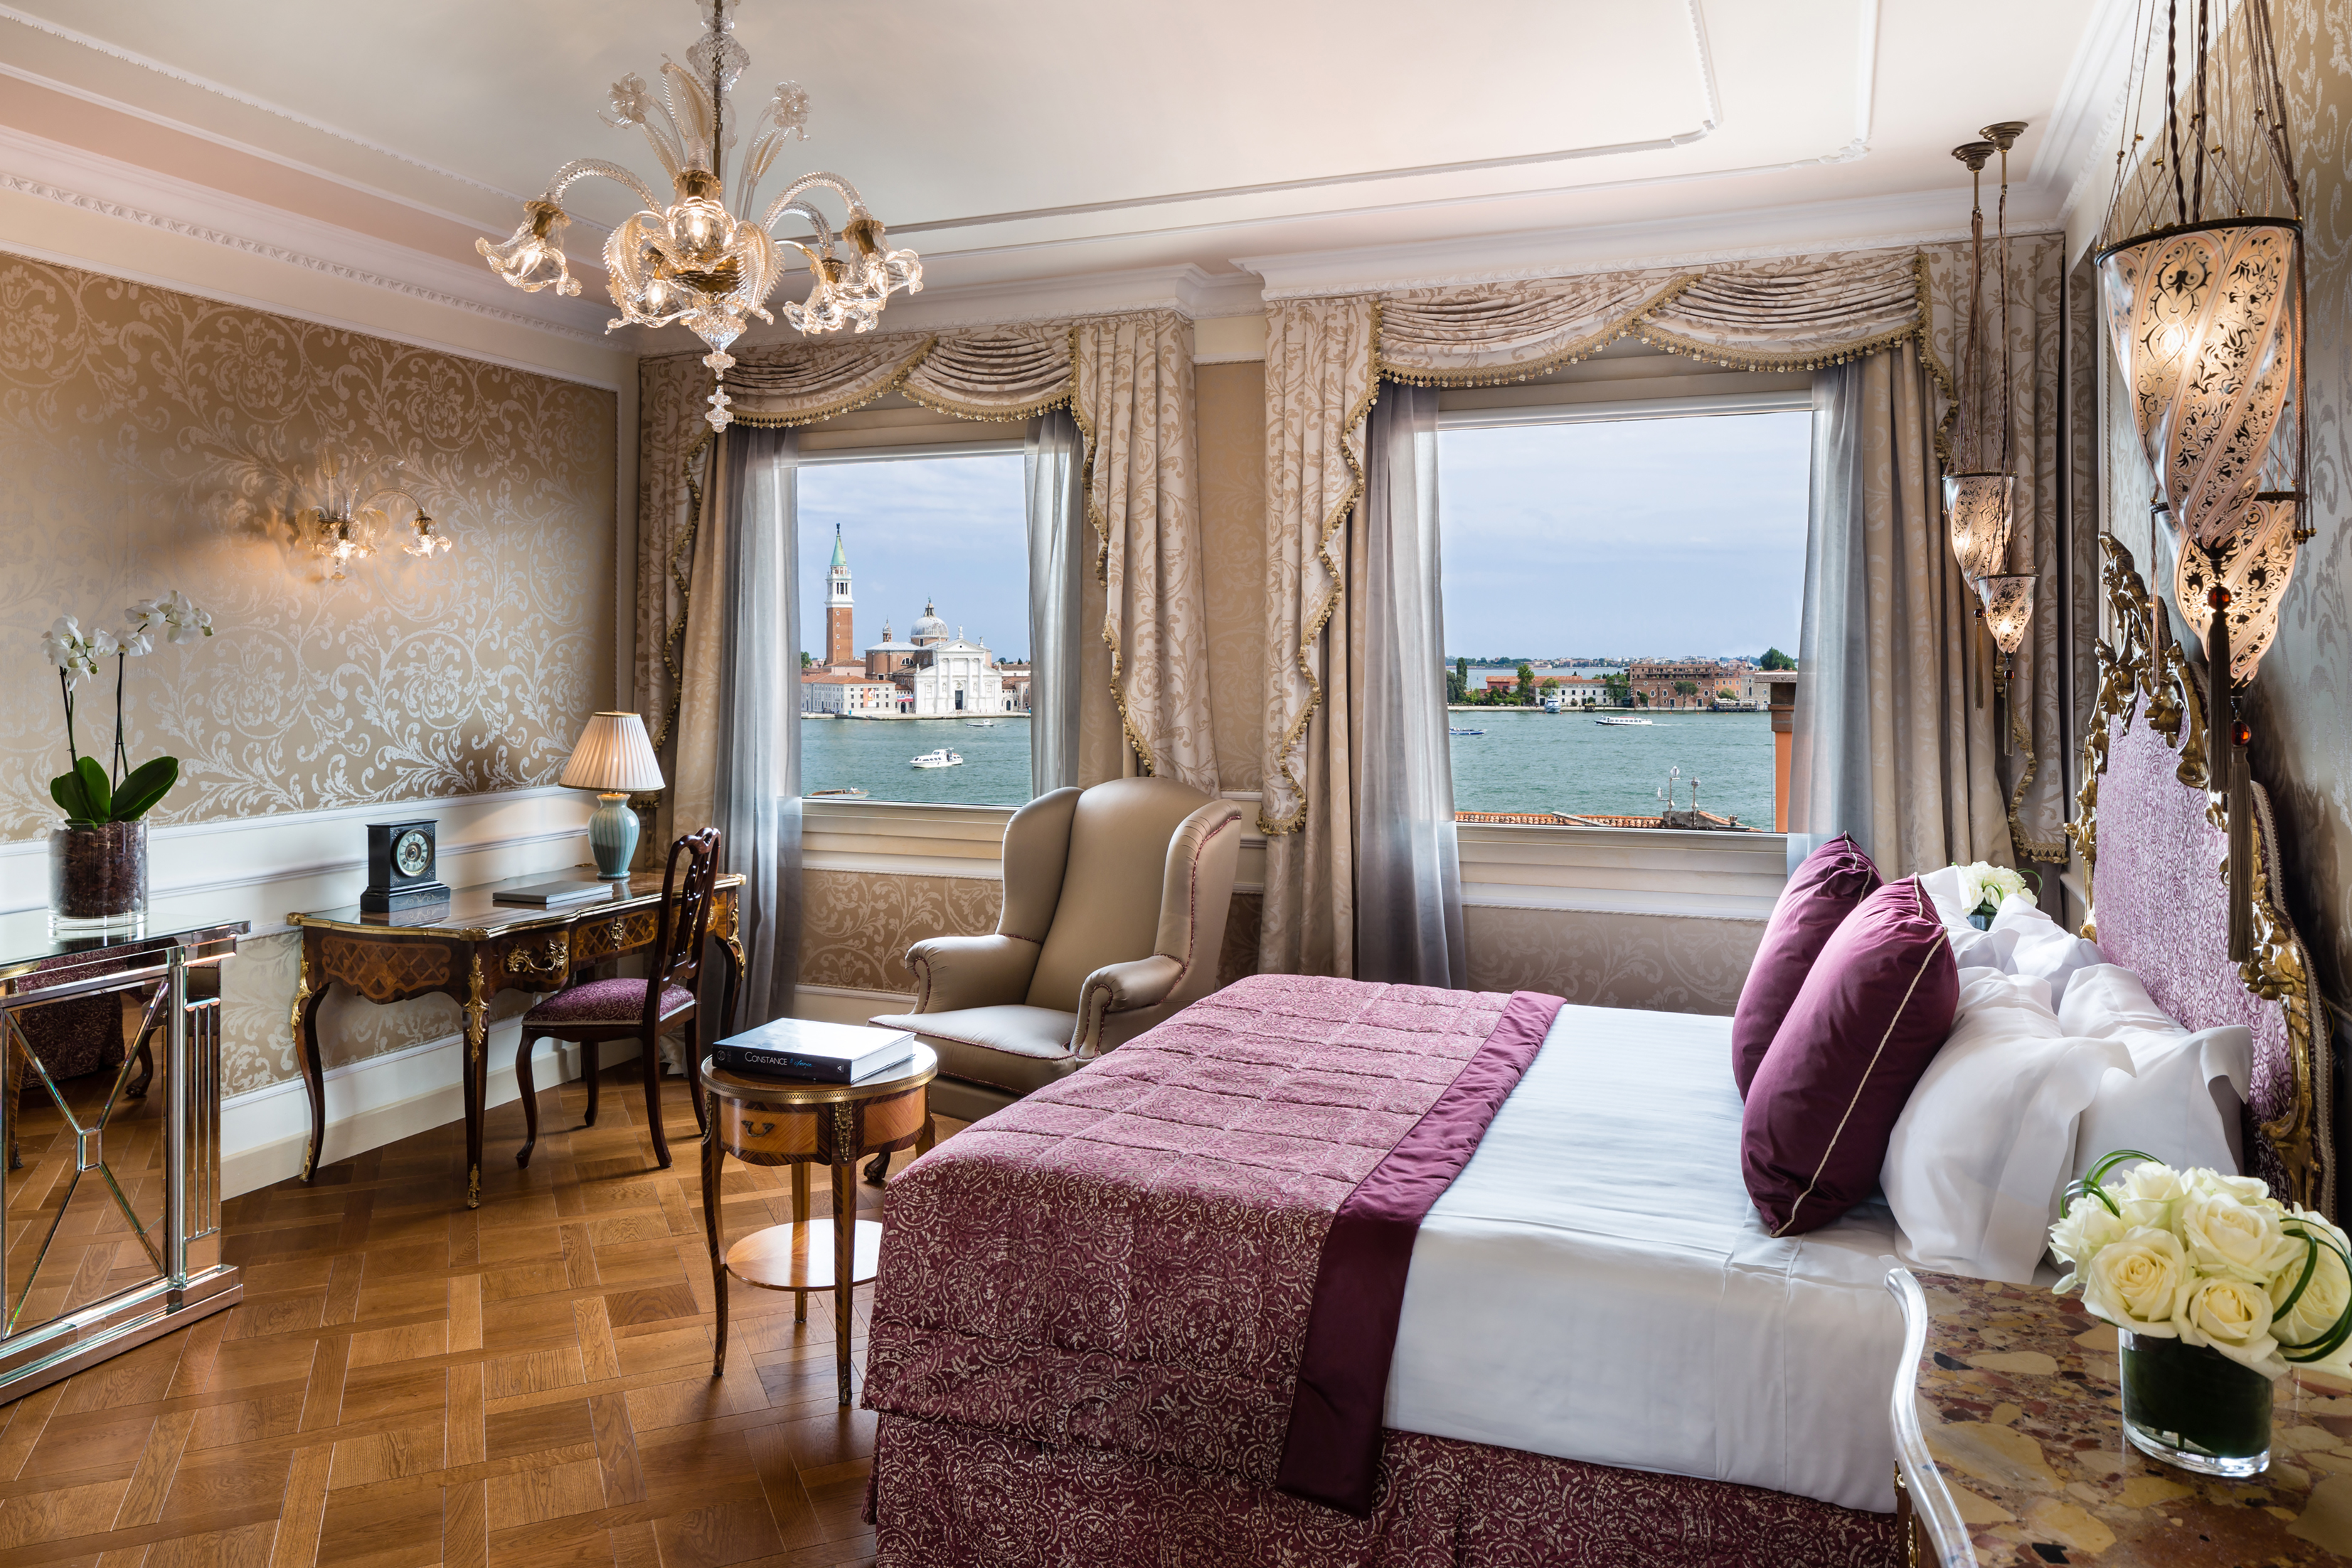 baglioni hotel luna, rooms and suites, rooms